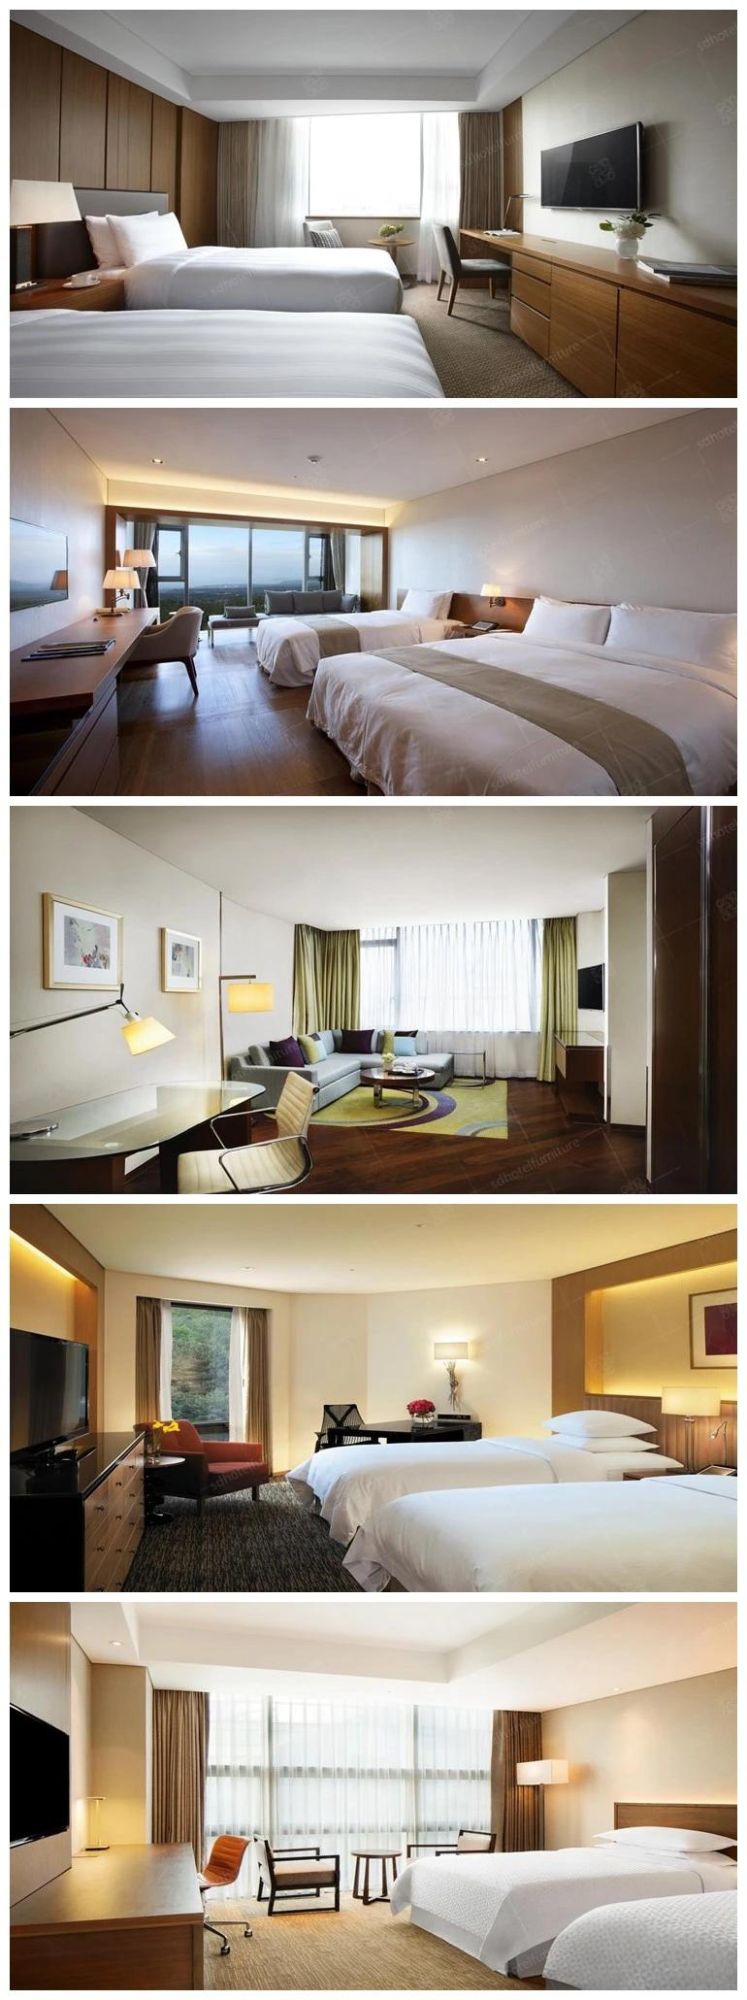 Foshan Custom Made Modern Simple Design Commercial Hampton Inn Hotel Bedroom Furniture Set